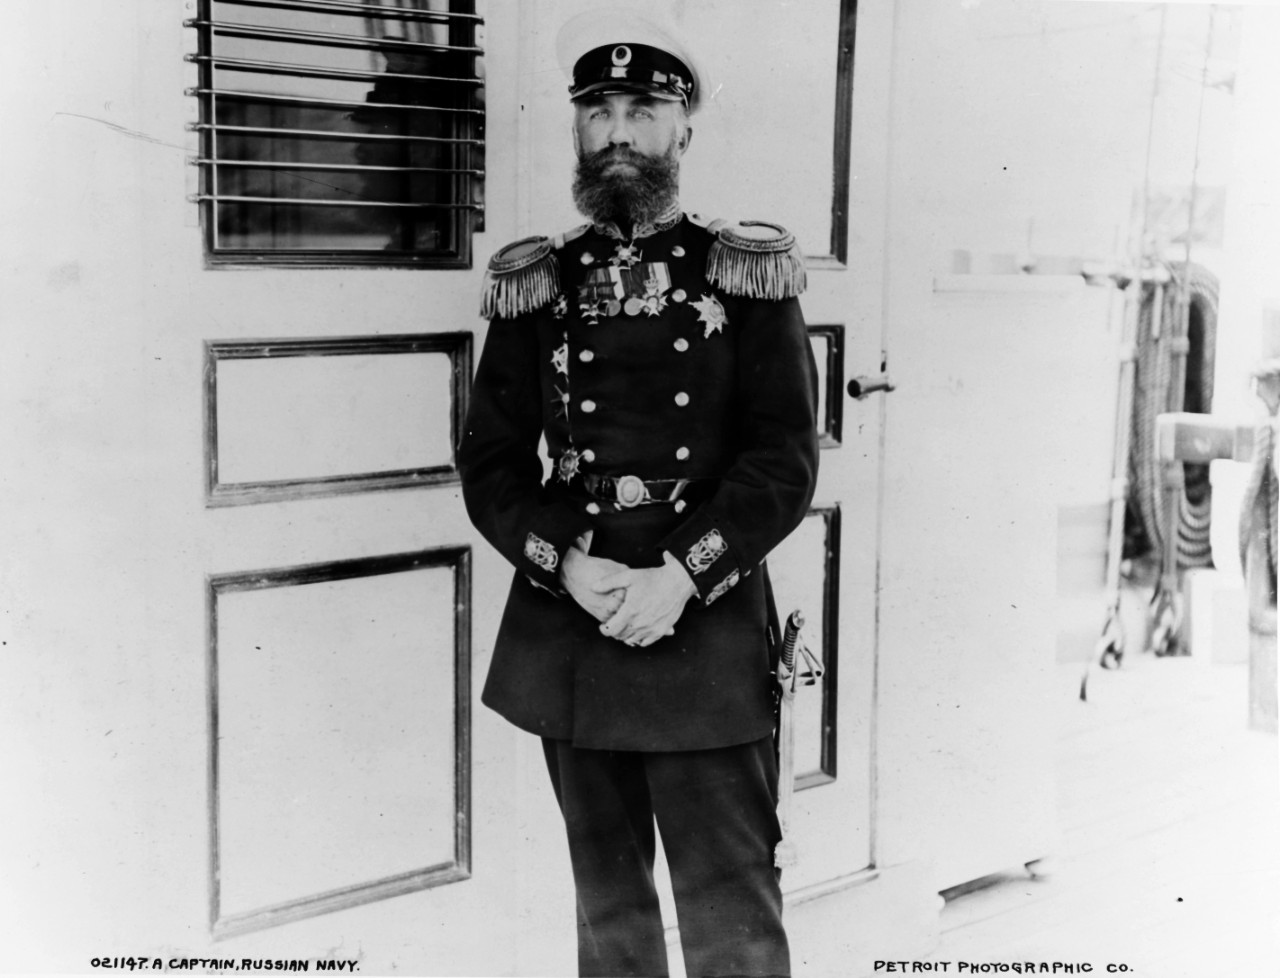 Russian navy captain